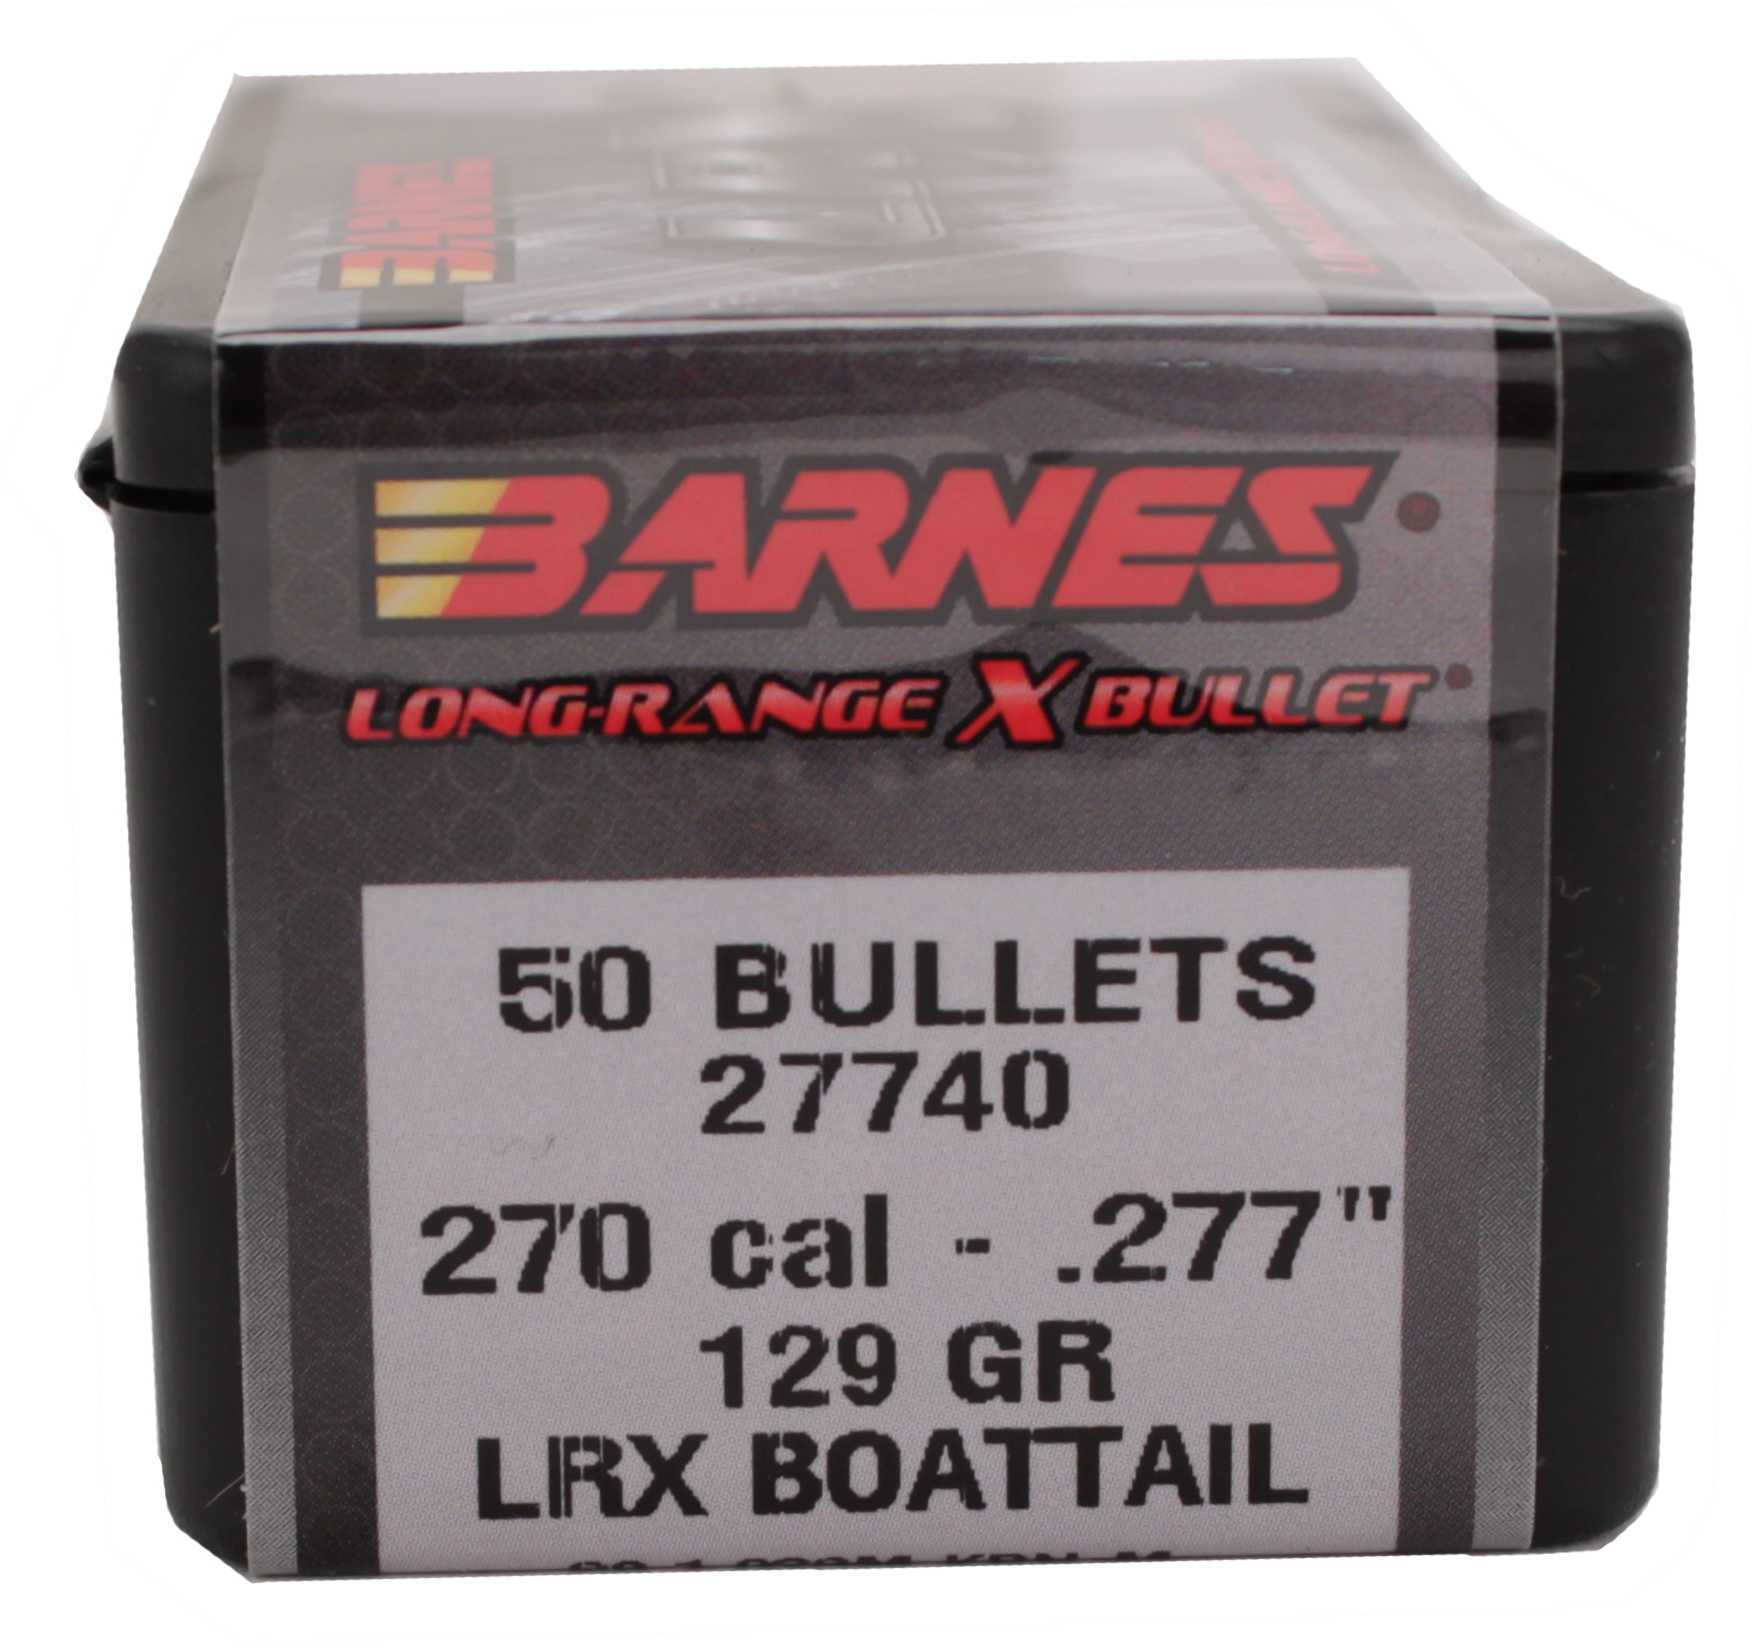 Barnes 270 Caliber Bullets .277" 129 Grains LRX Boattail (Per 50) Md: 27740